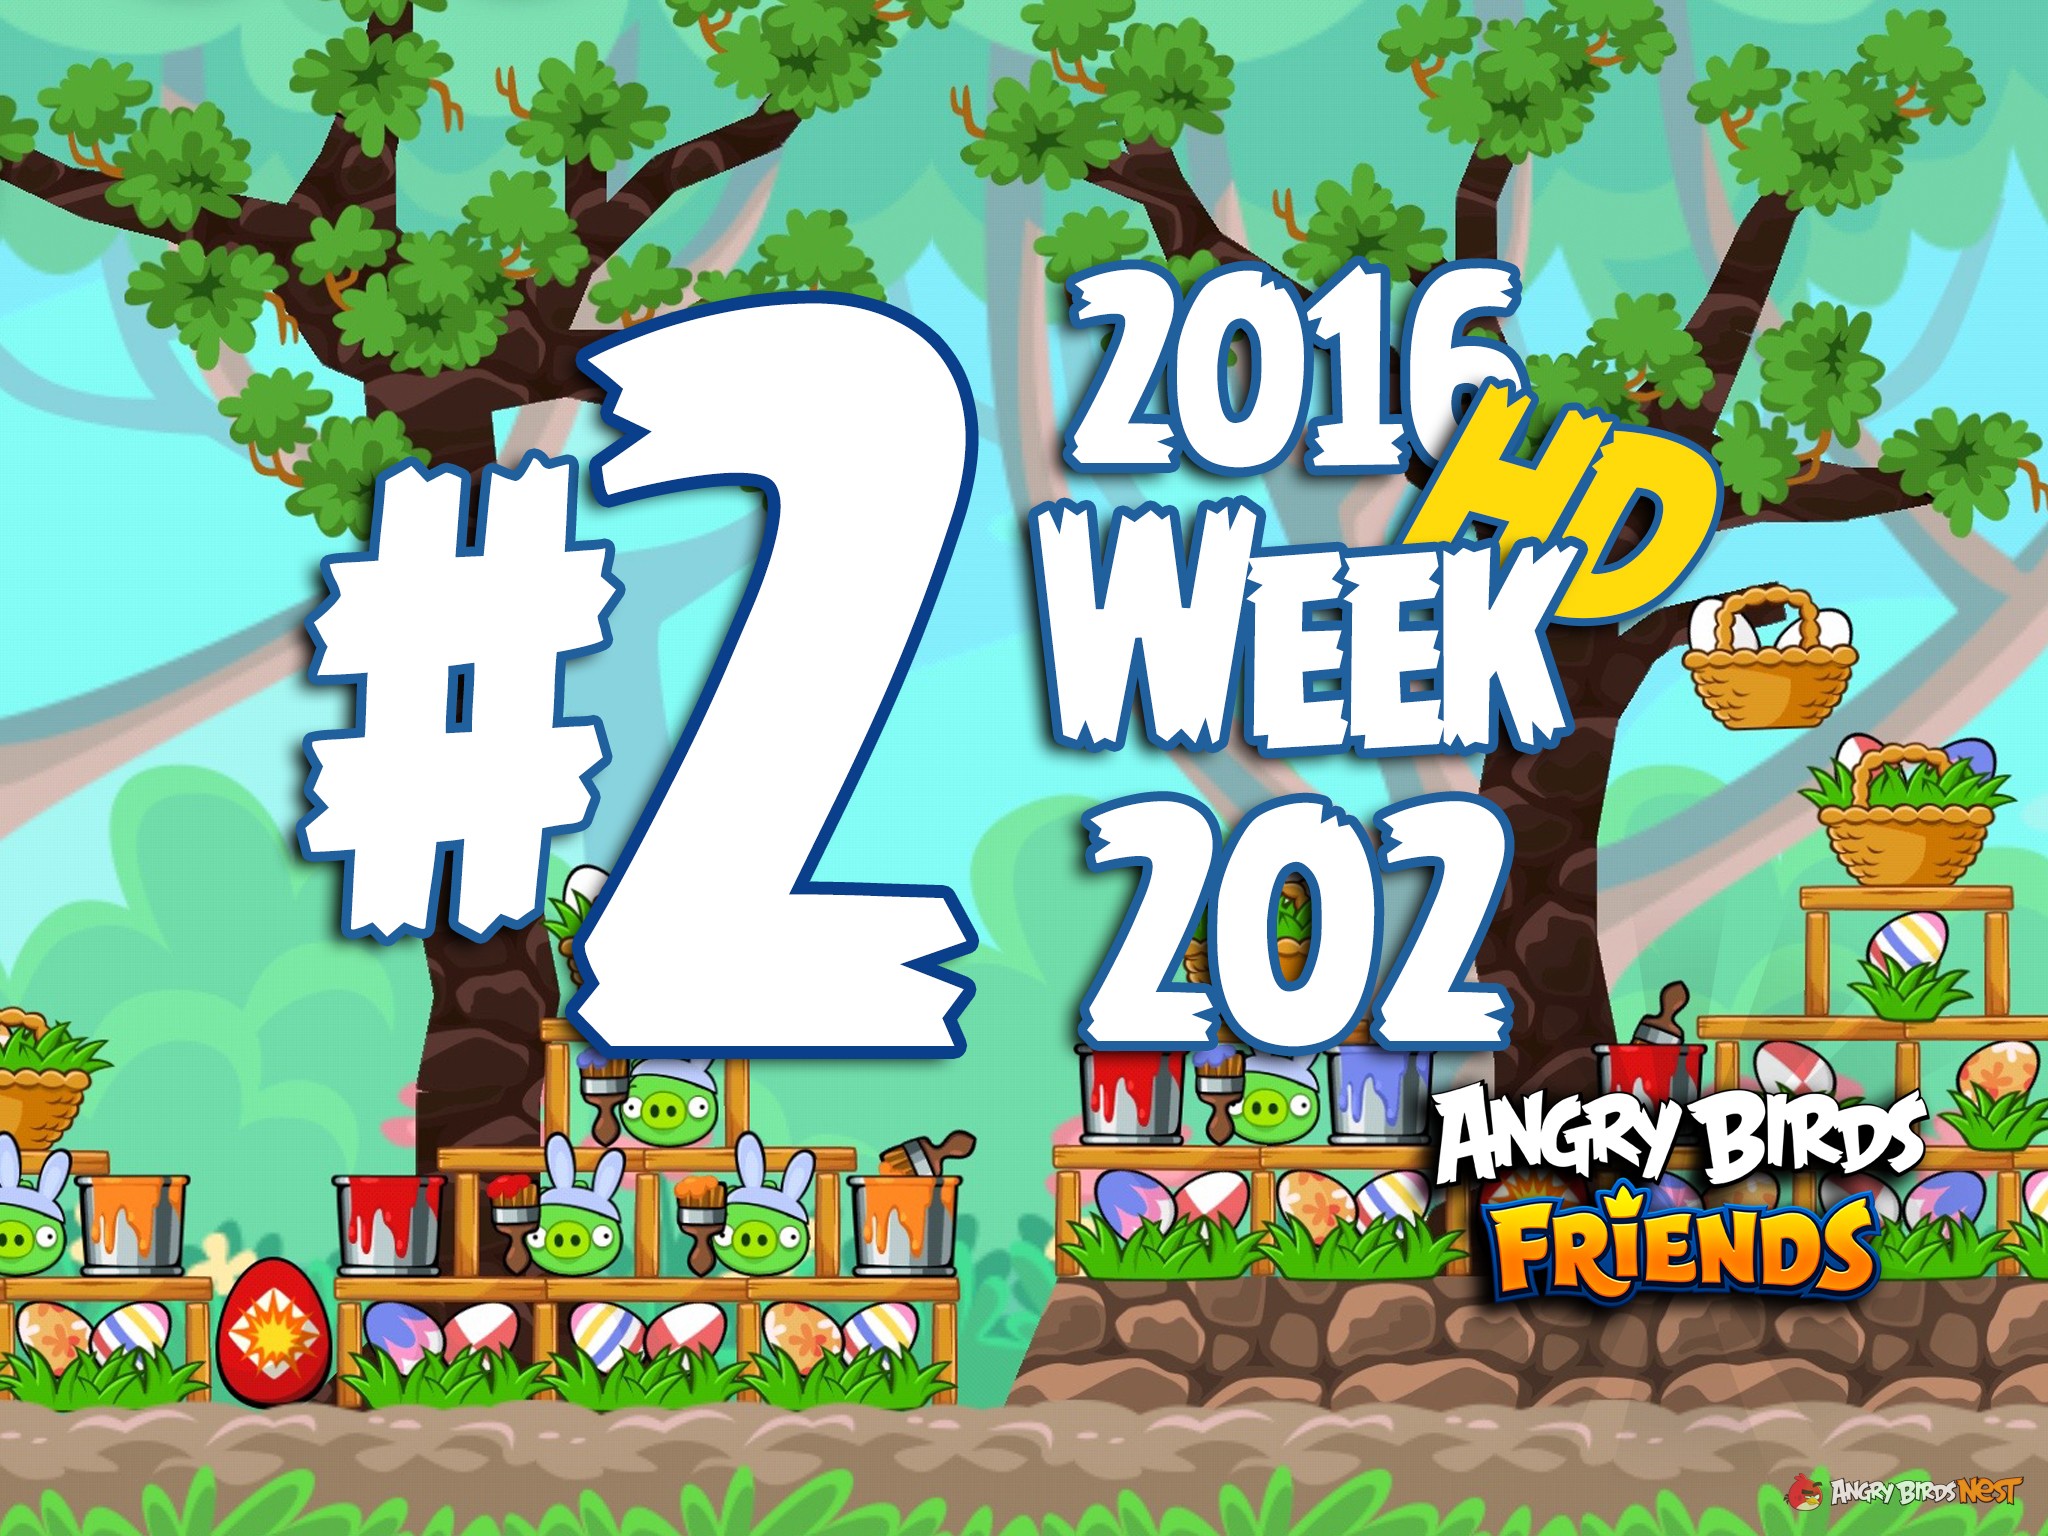 Angry Birds Friends Tournament Level 2 Week 202 Walkthrough | March 24th 2016